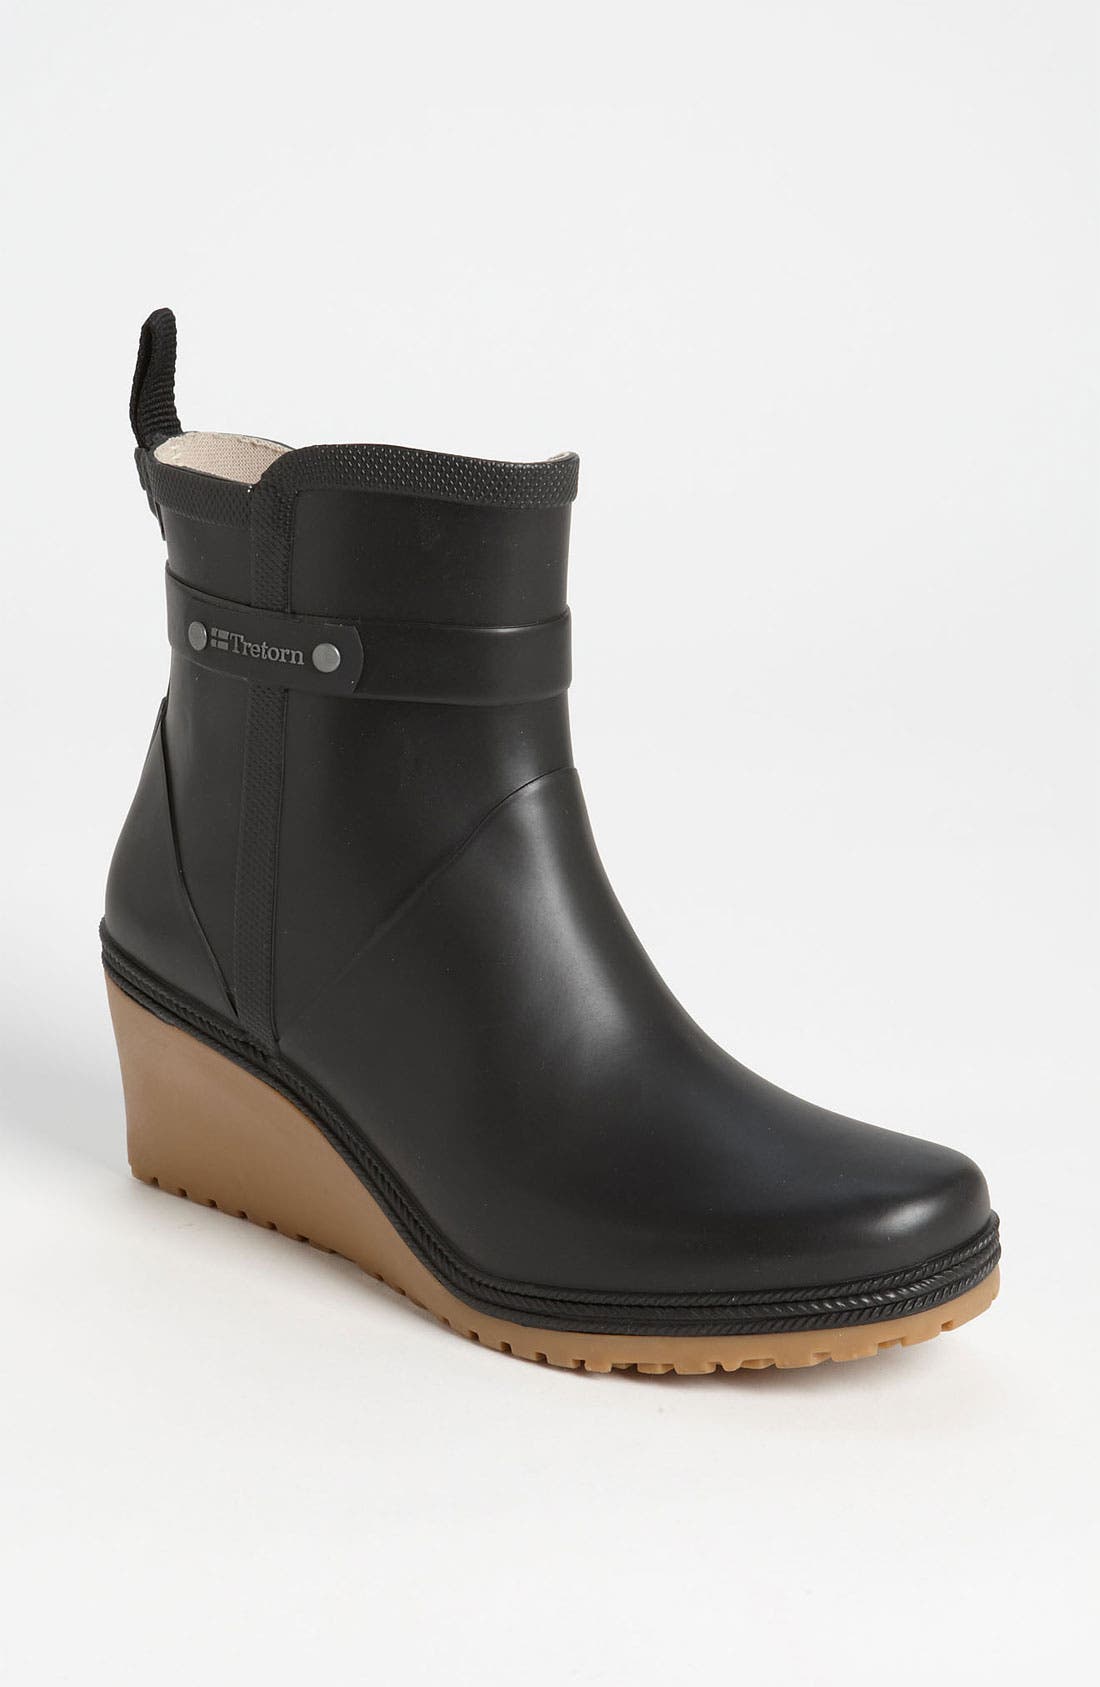 tretorn wedge rain boots